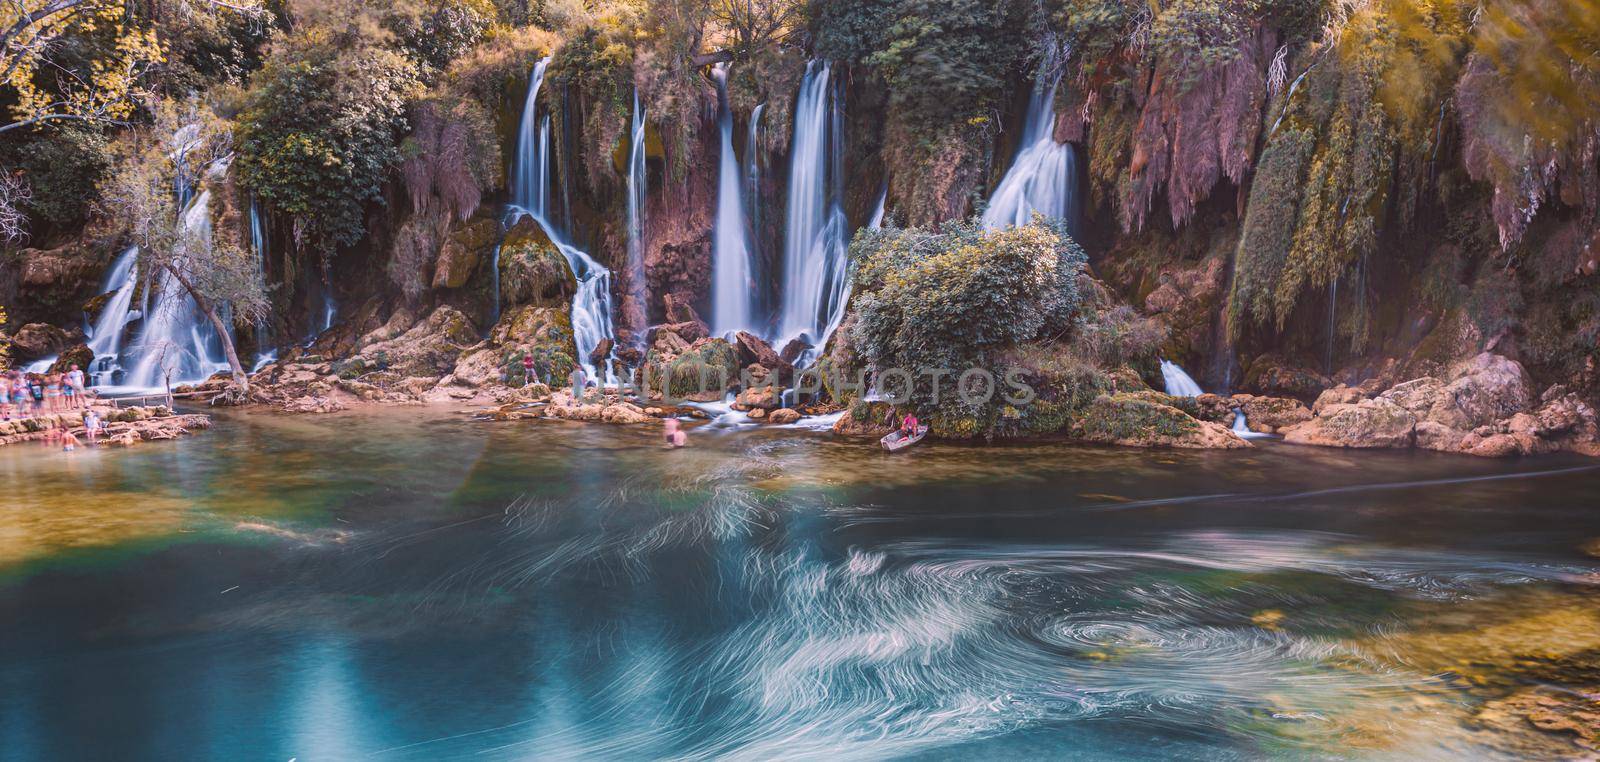 Kravice Waterfalls, Bosnia and Herzegovina, Europe by Yolshin